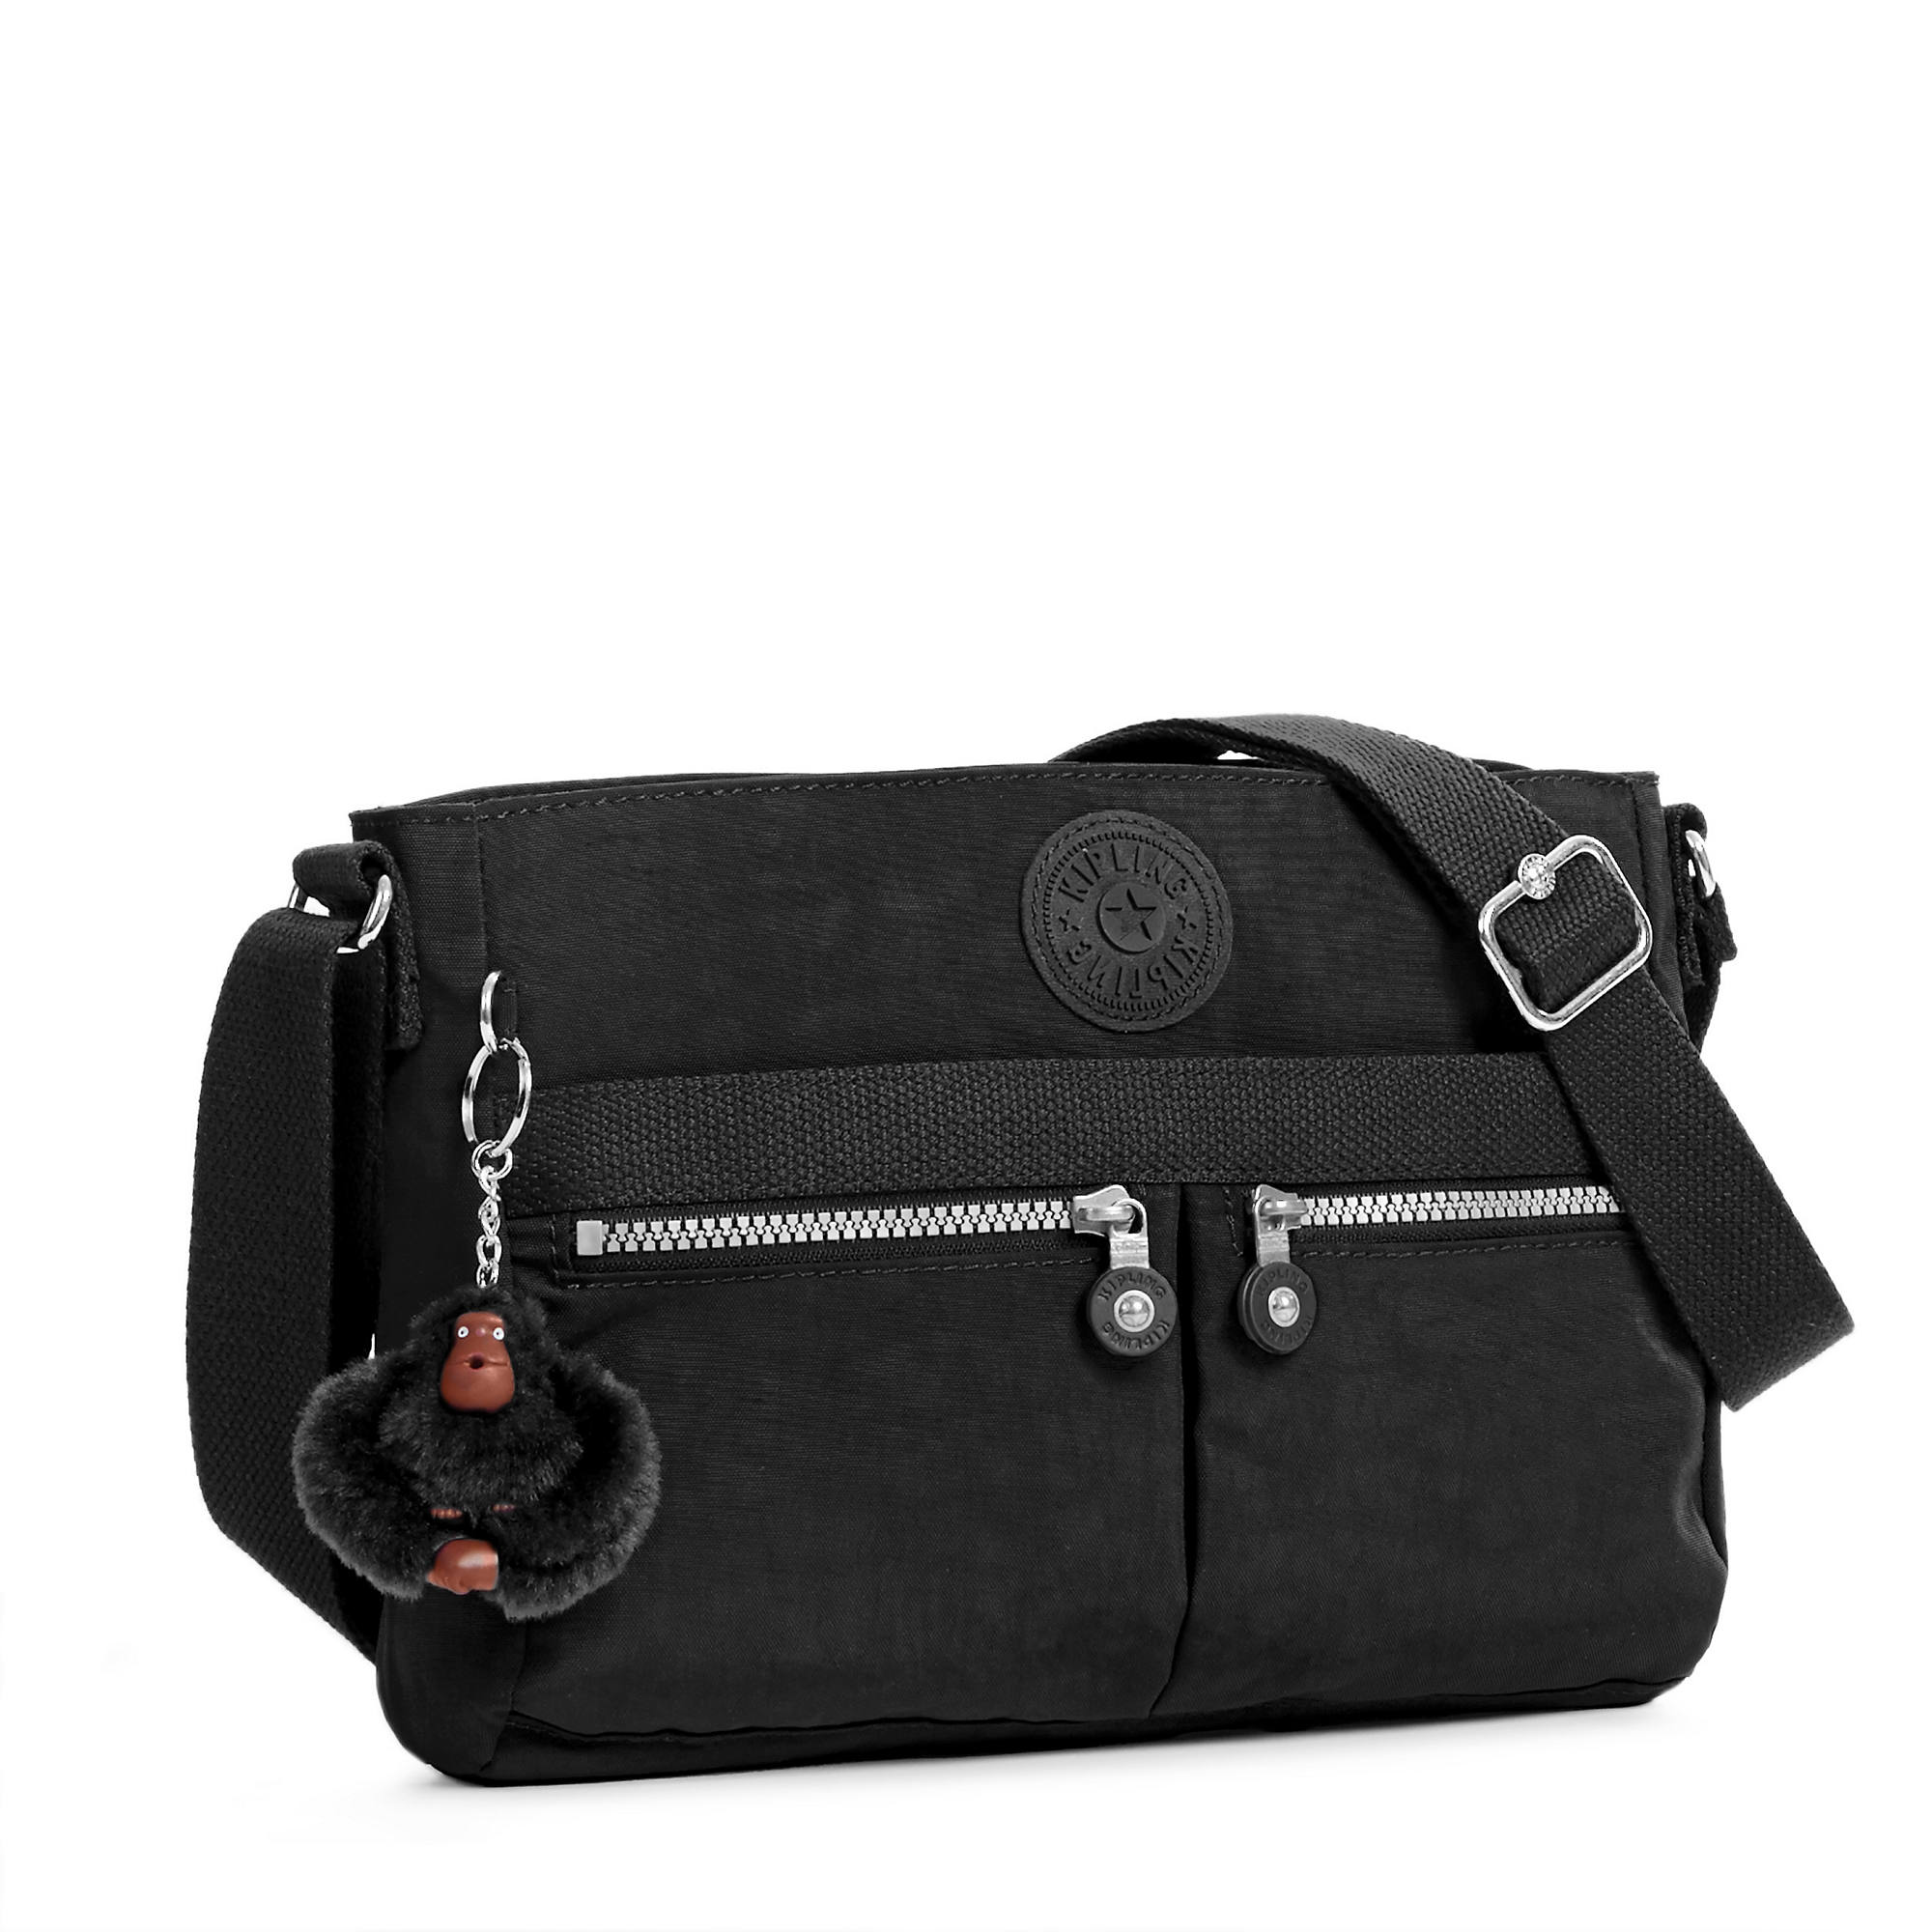 Kipling Angie Metallic Crossbody Bag | eBay